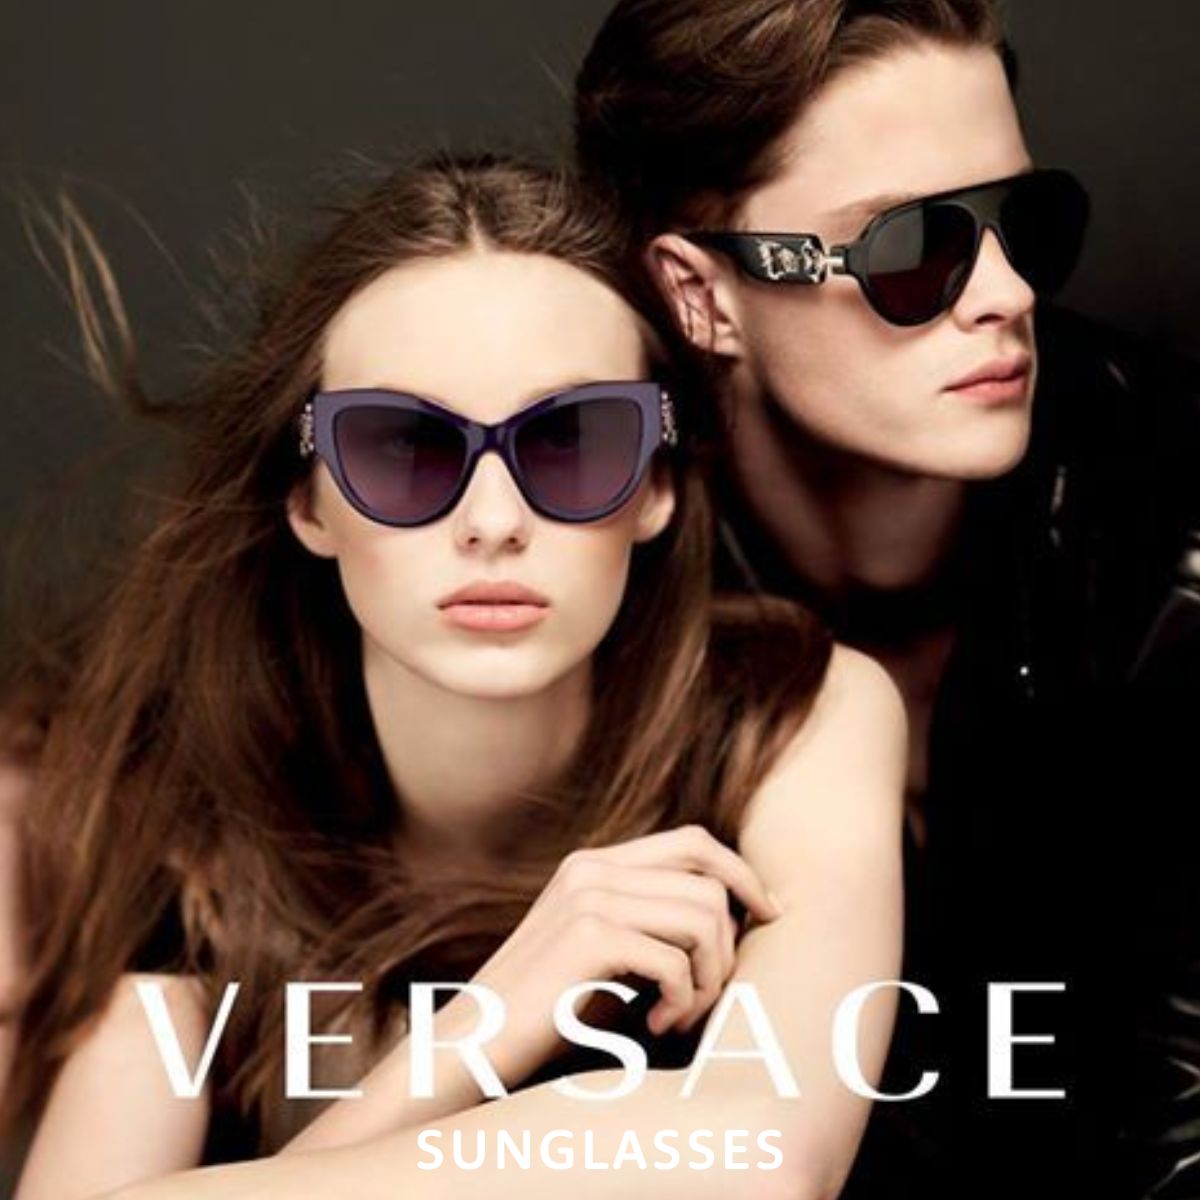 "Buy Top Best Versace Sunglasses for Men and Women at Optorium"